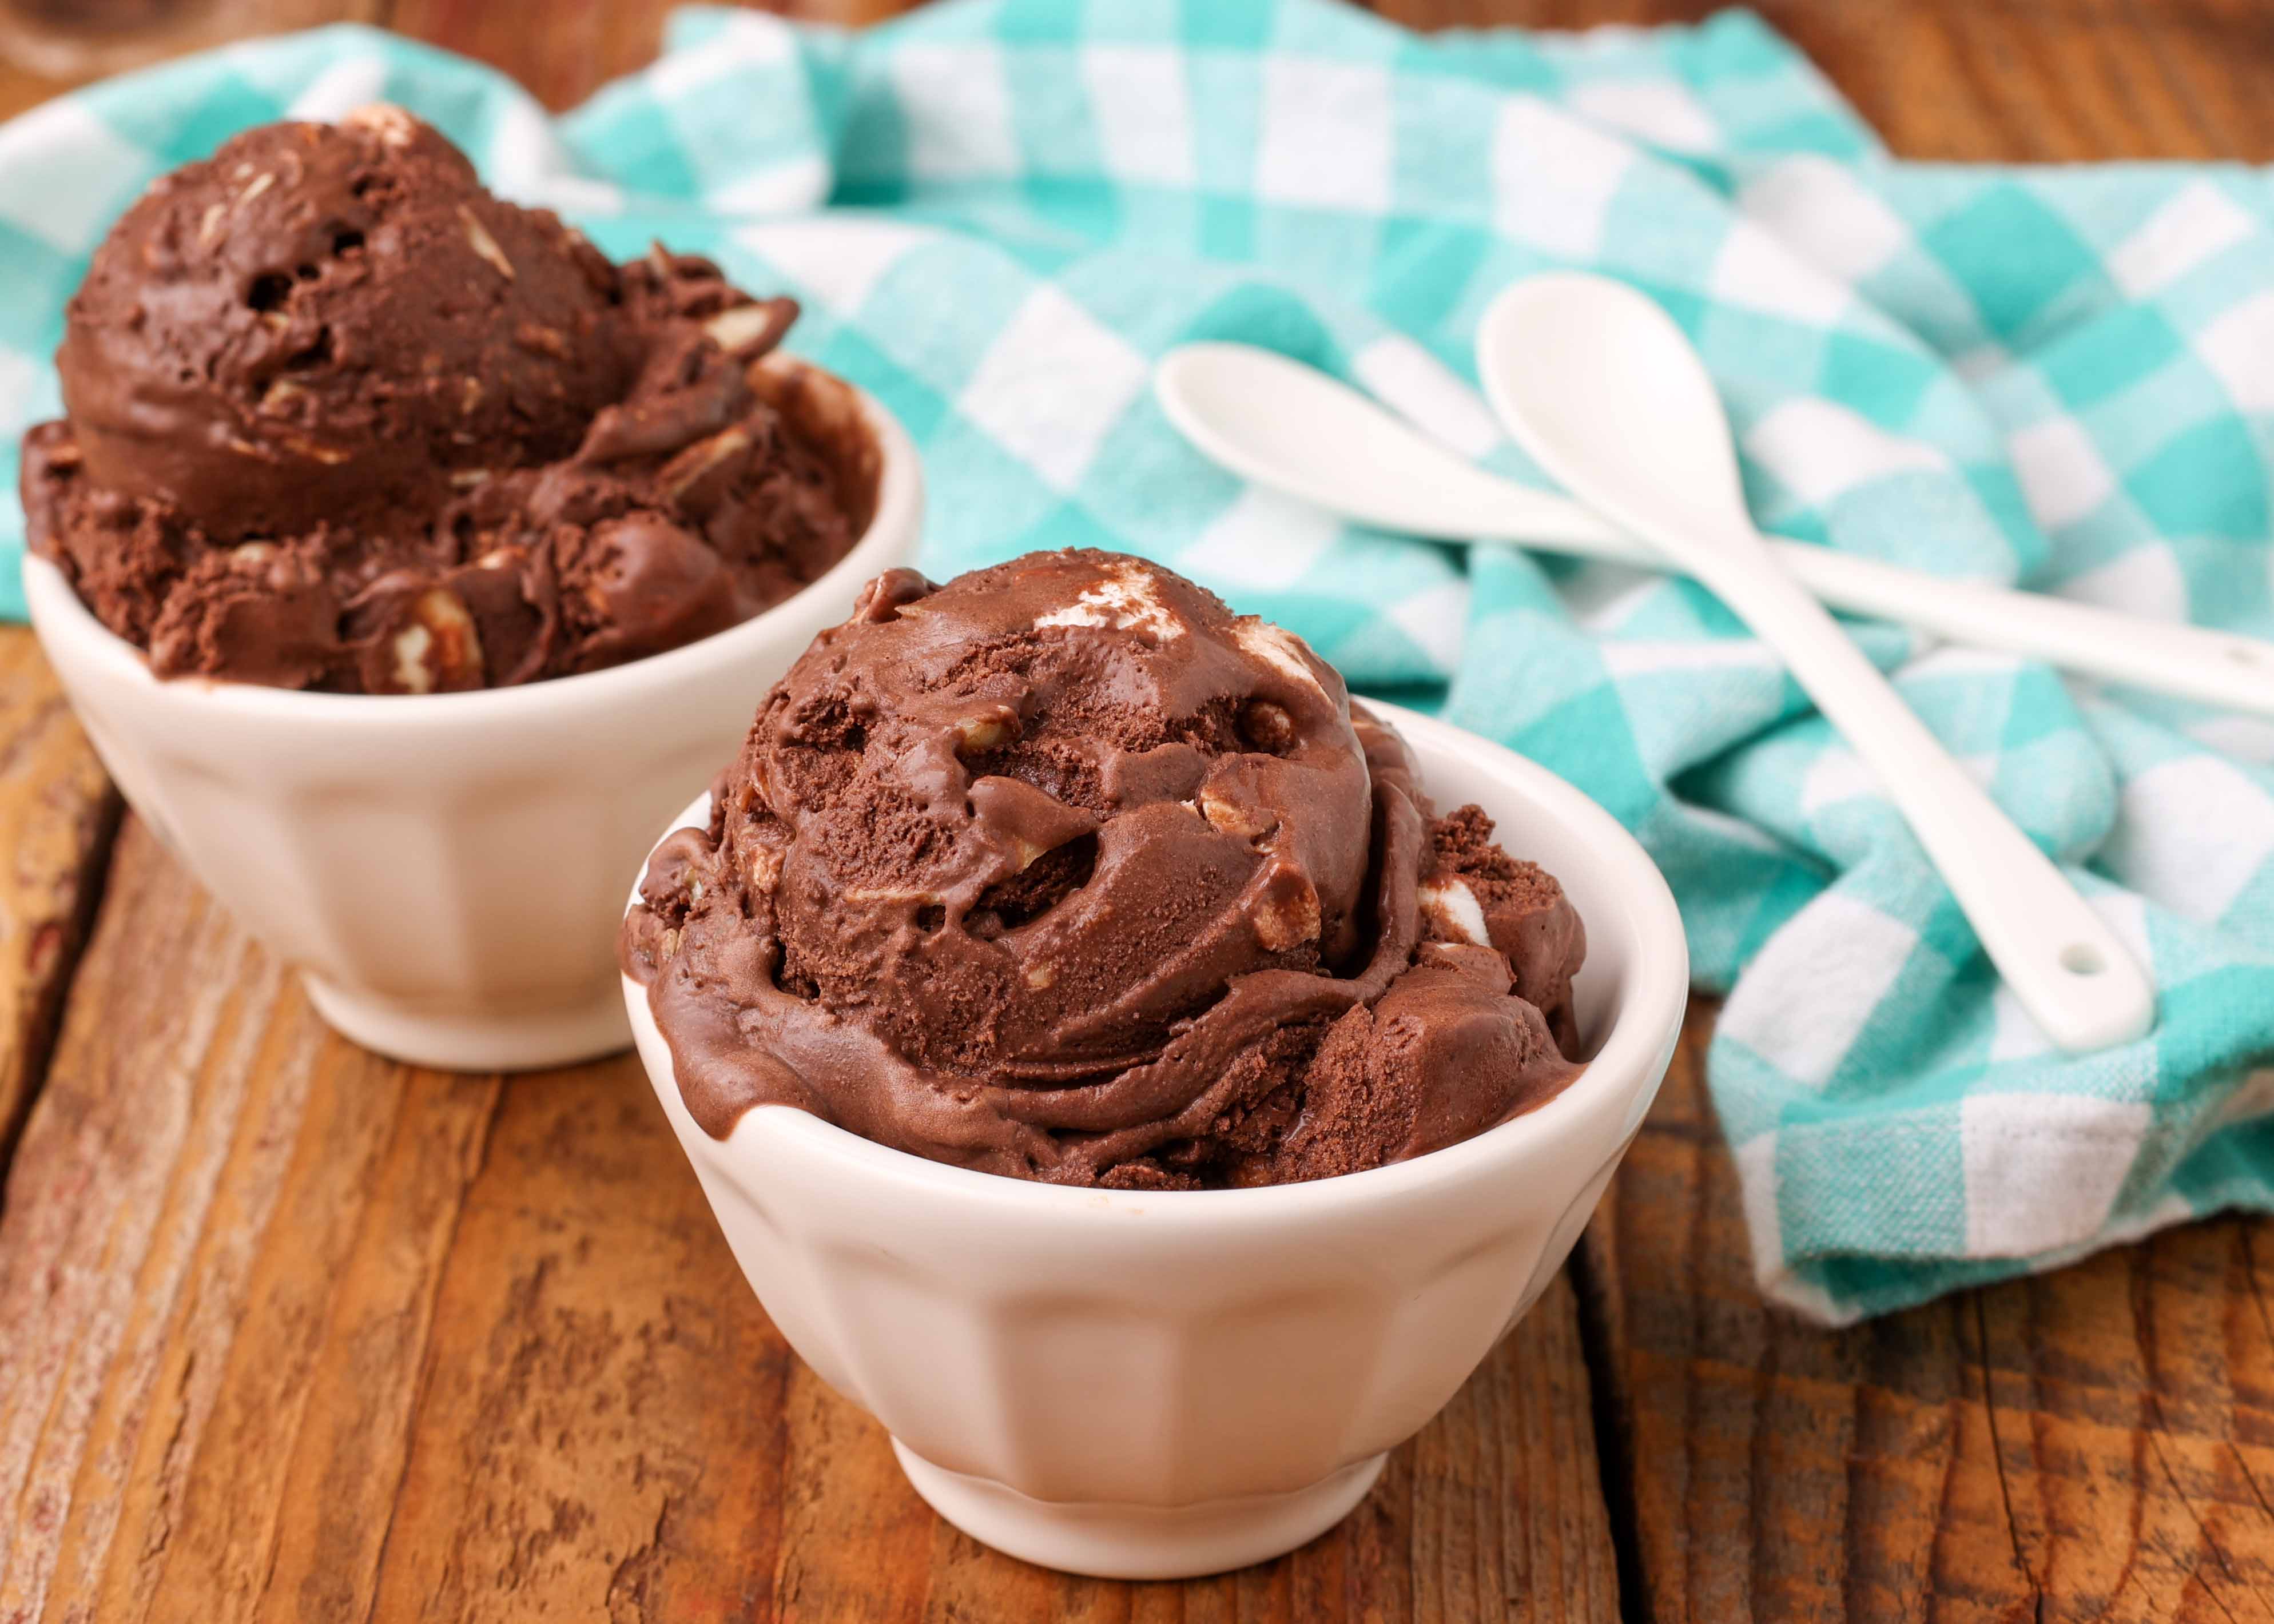 Best Mason Jar Ice Cream Recipe - How to Make Mason Jar Ice Cream